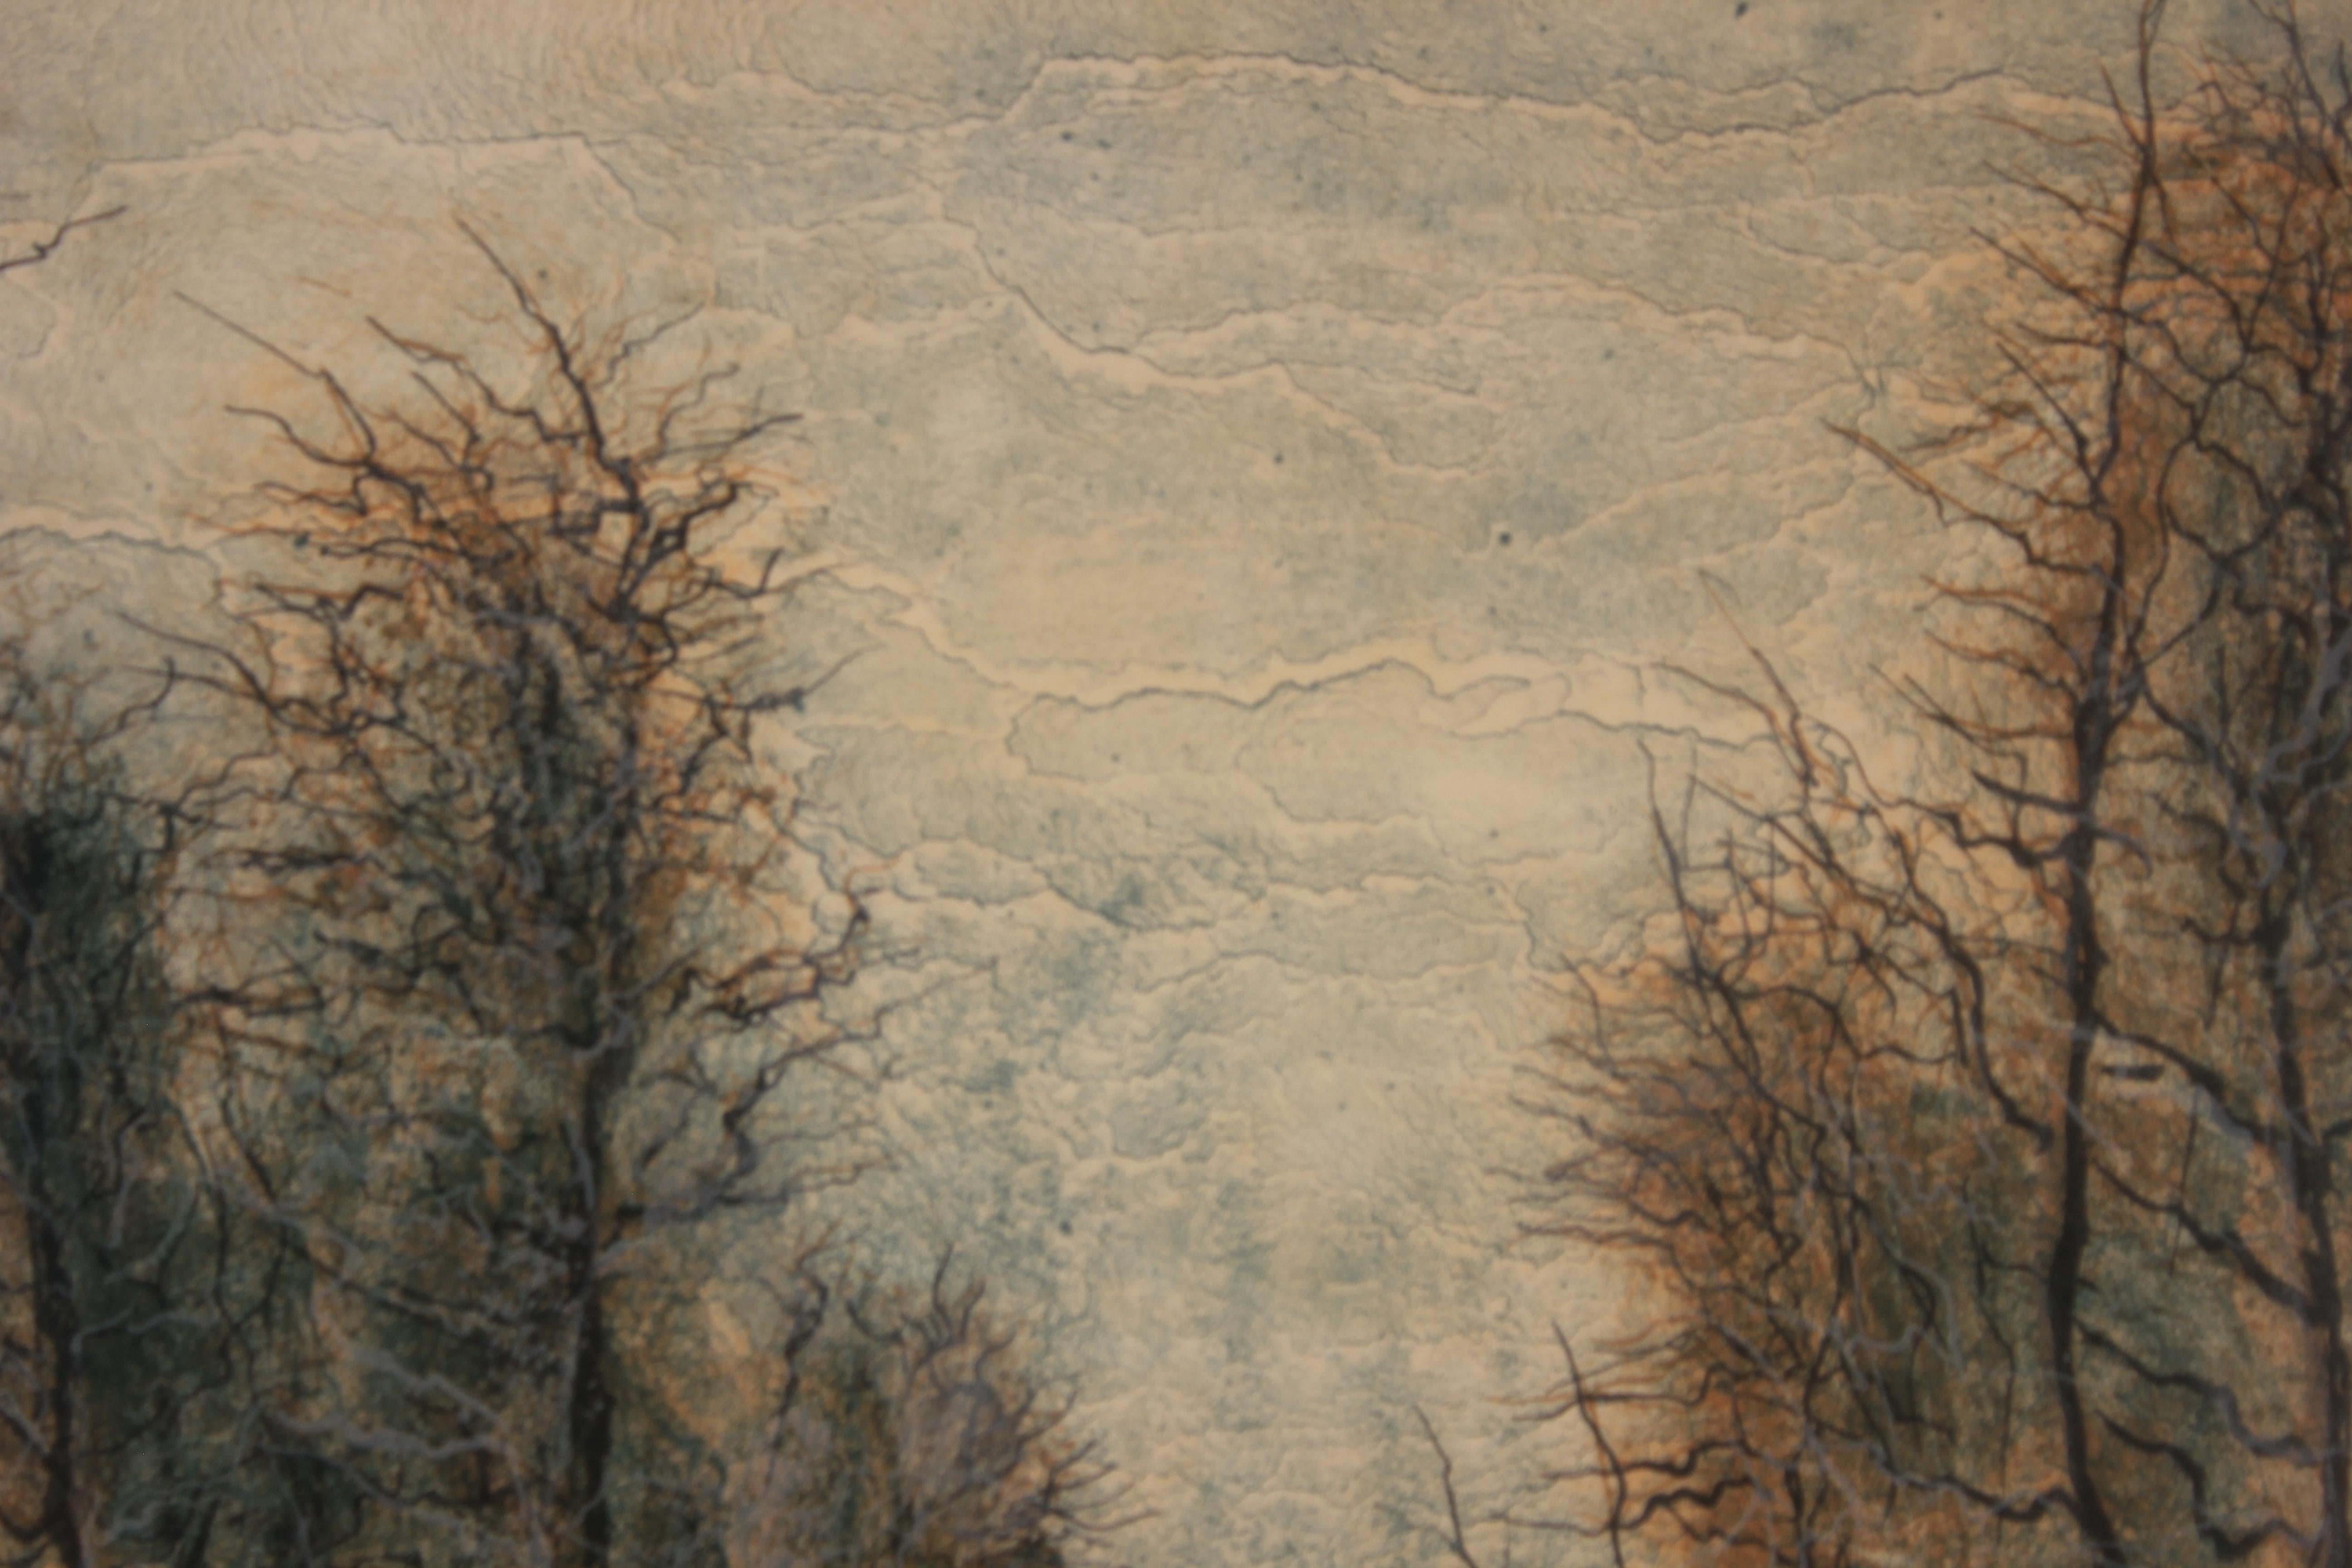 Winter Forest Landscape Edition 133 of 215 - Abstract Impressionist Print by Bernard Gantner